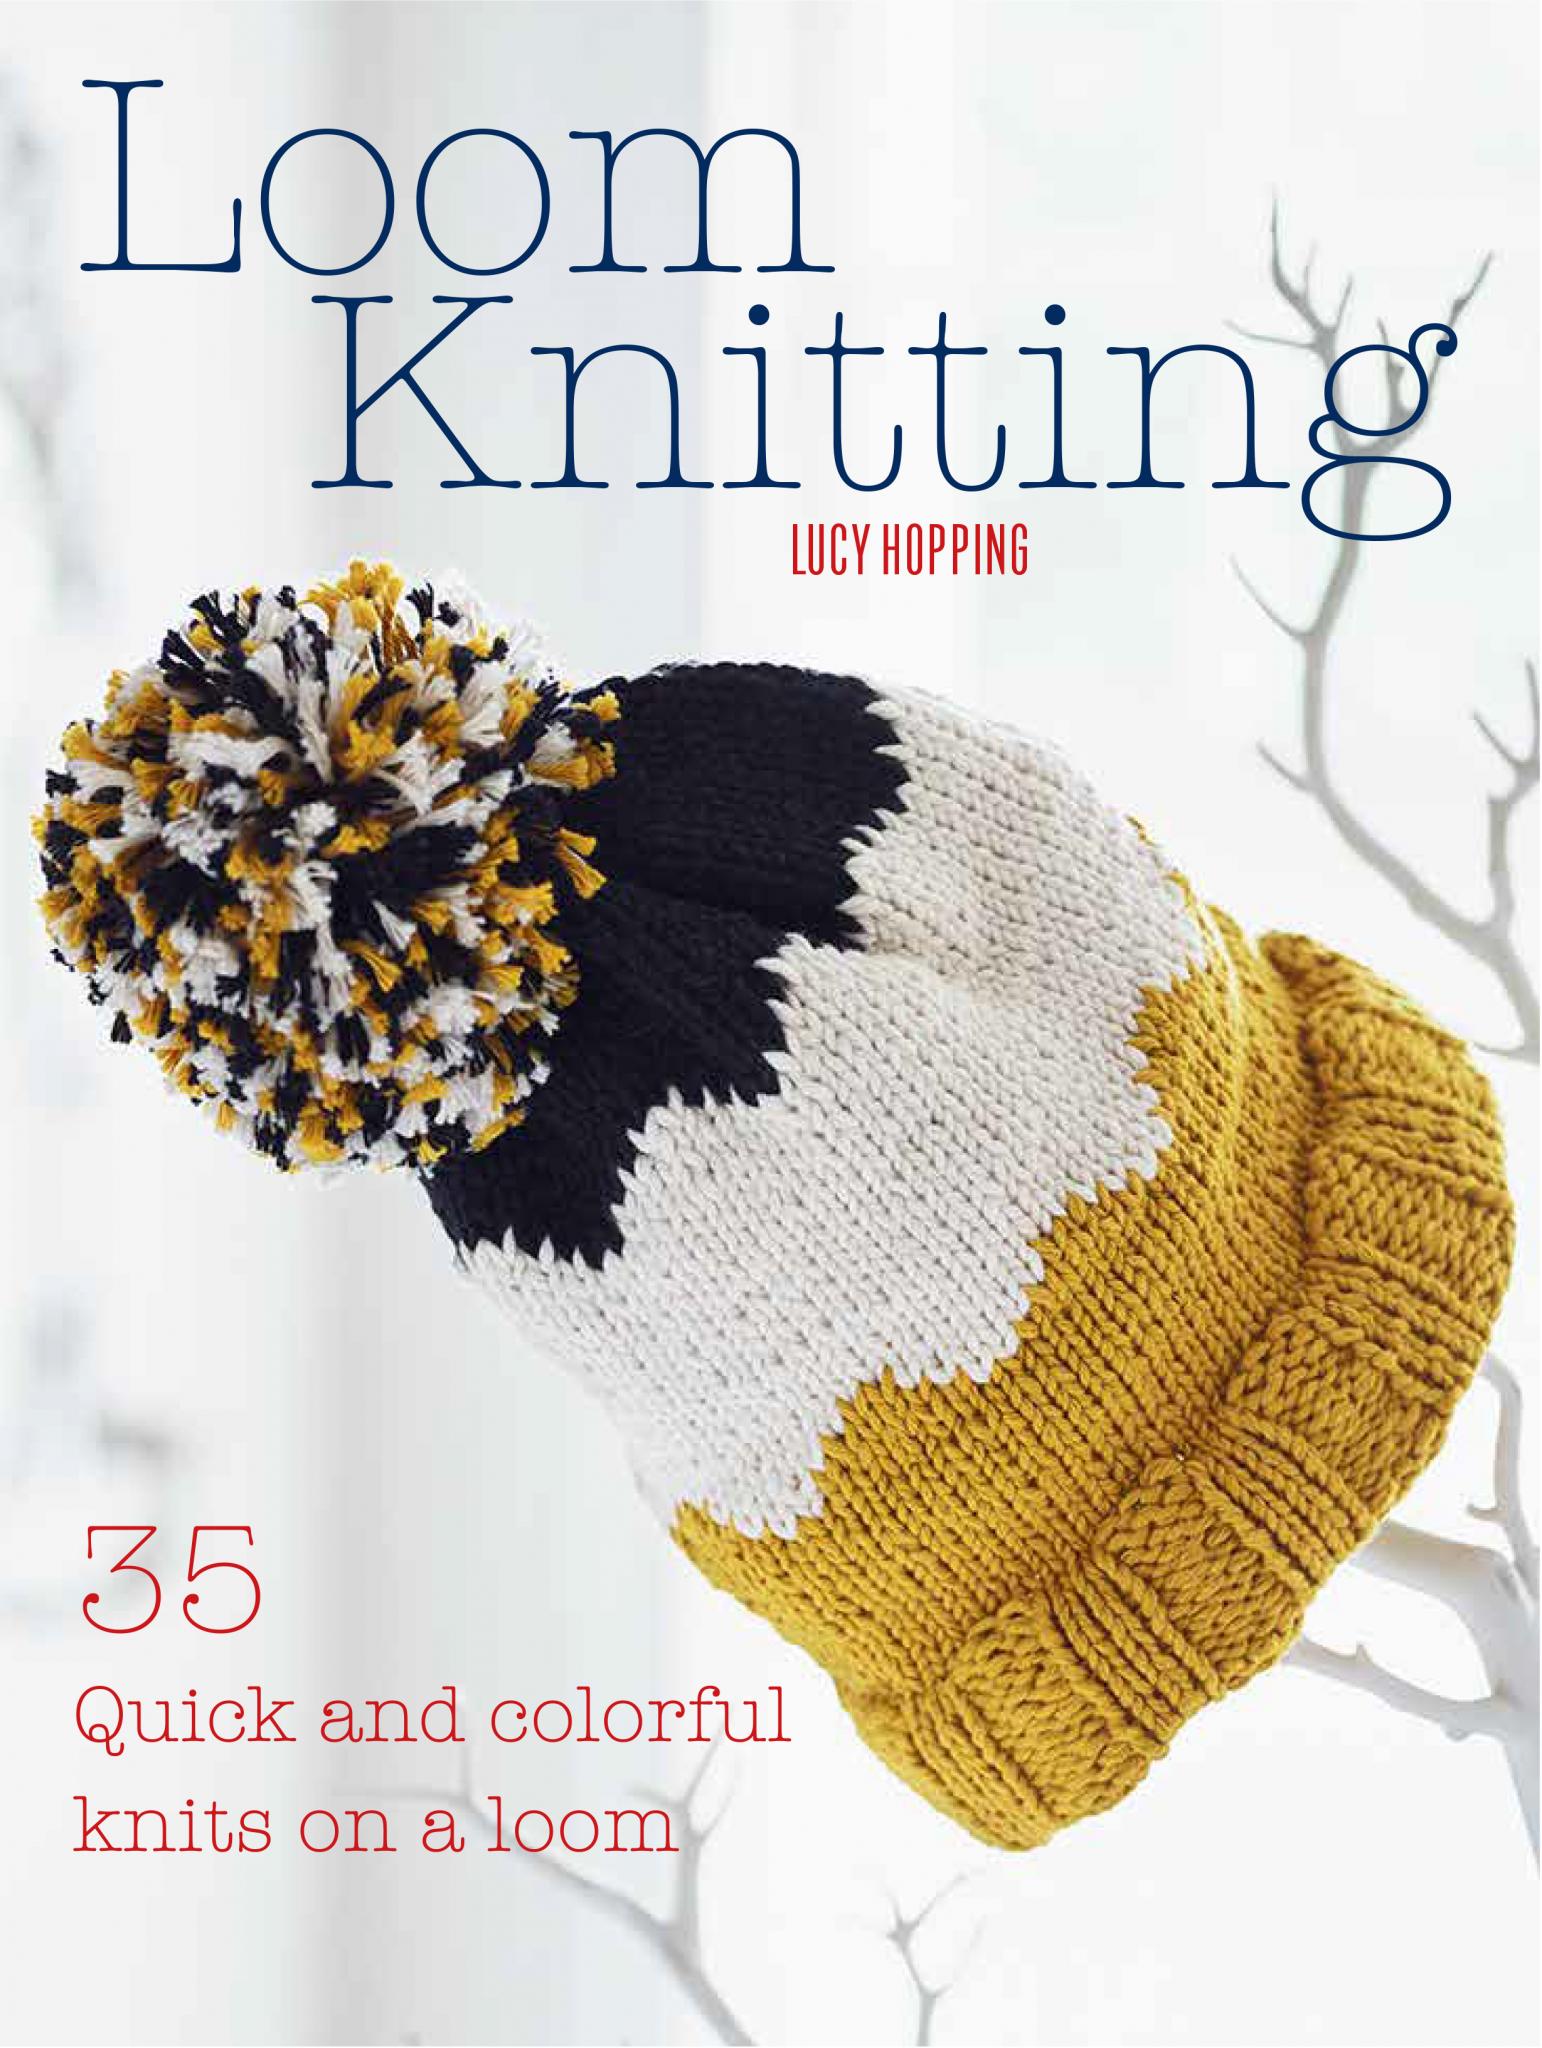 Knitting Loom Guide - Knitting News